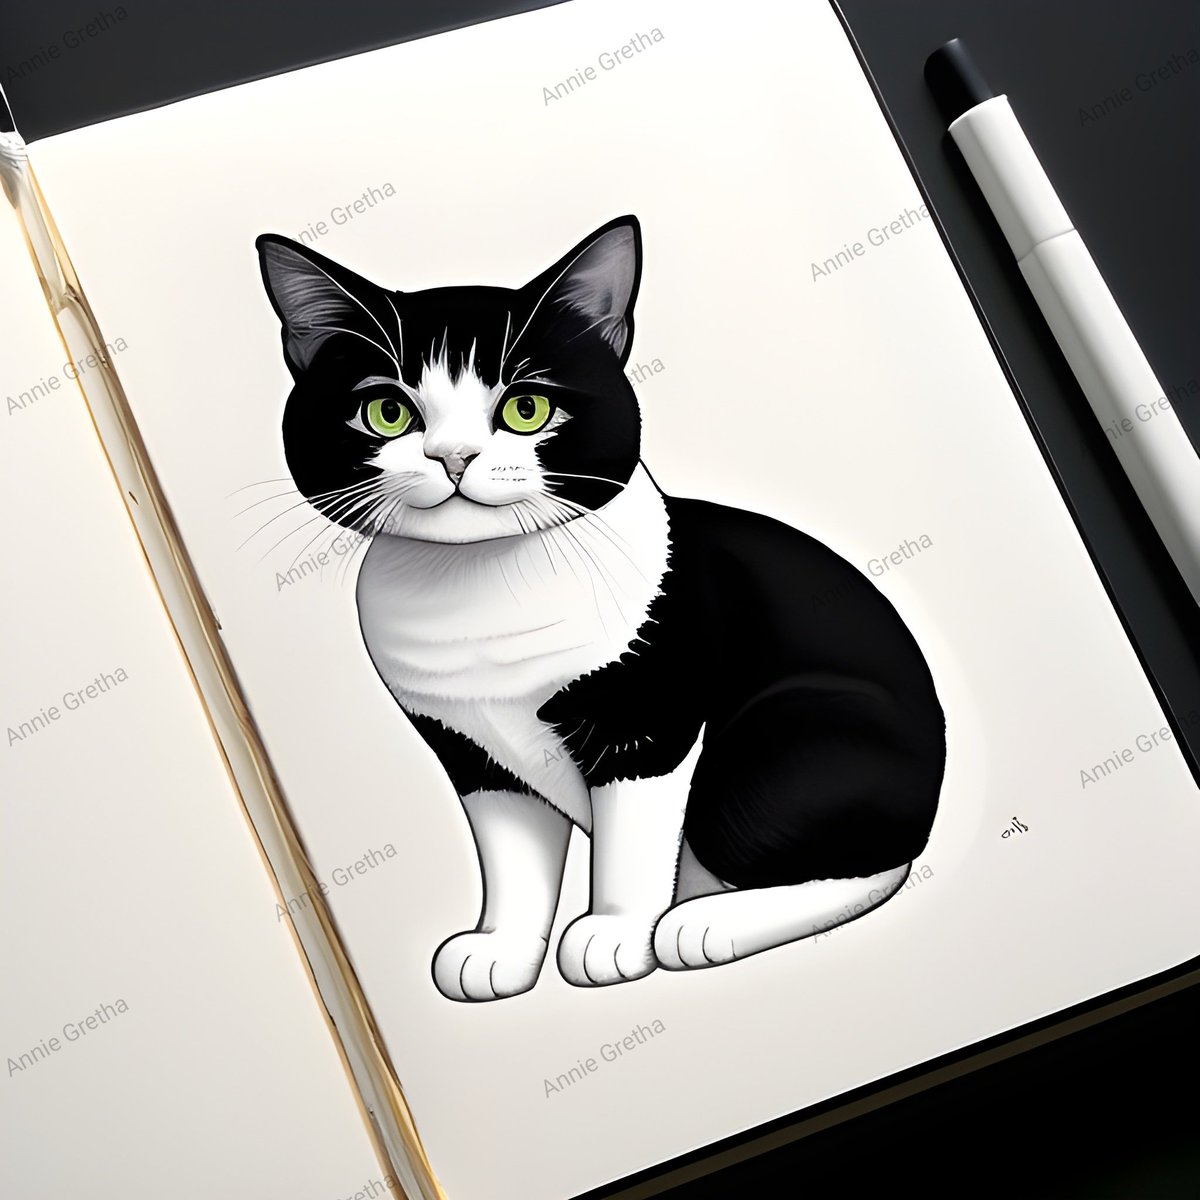 Pet cat🐱
#pet #pets #petlovers #cat #catlover #sketchbook #sketch #easydrawing #opensea #art #drawingsketch #drawingpencil #drawingnotebook #love #rarible